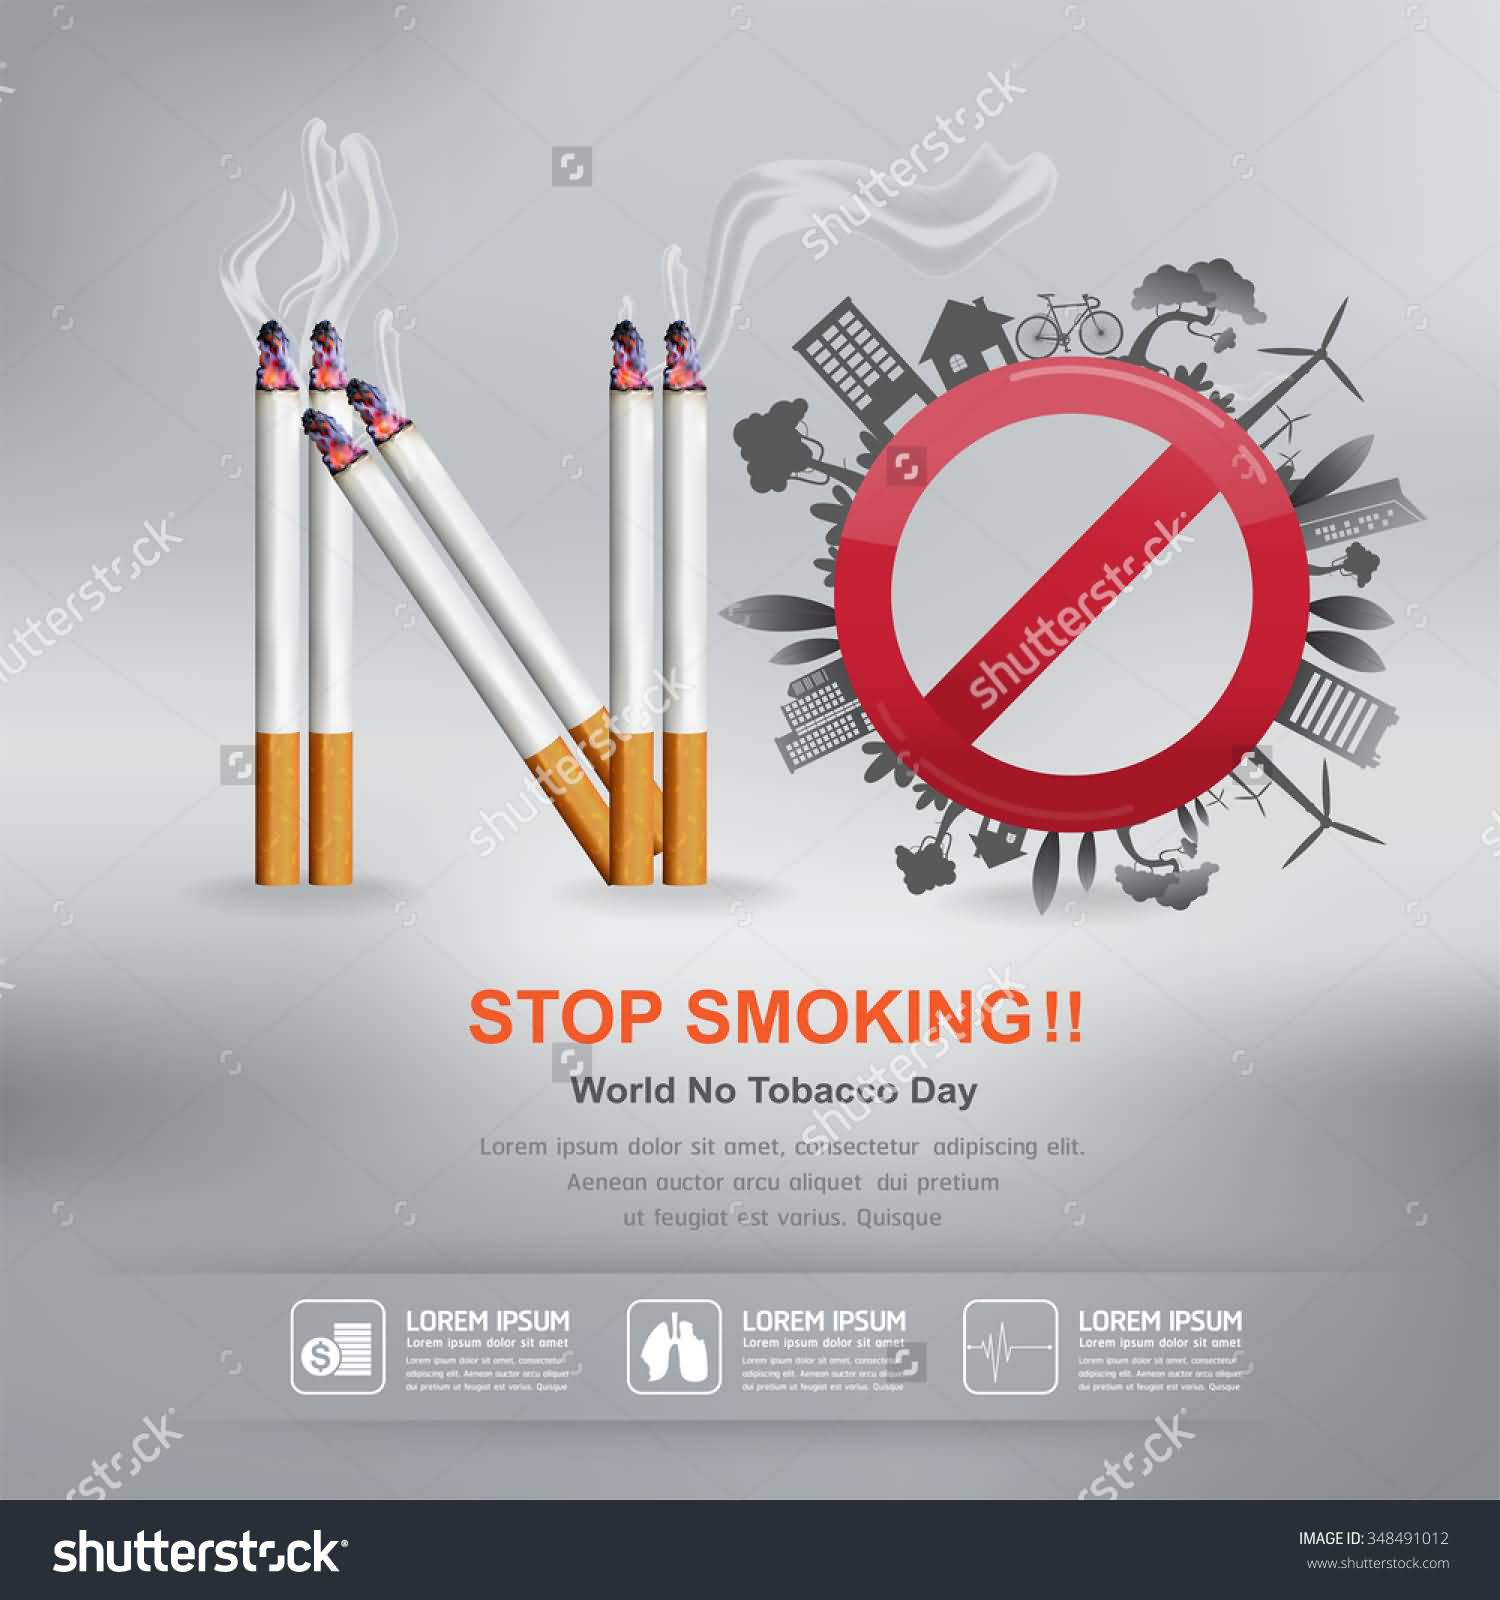 Stop Smoking World No Tobacco Day Illustration Poster